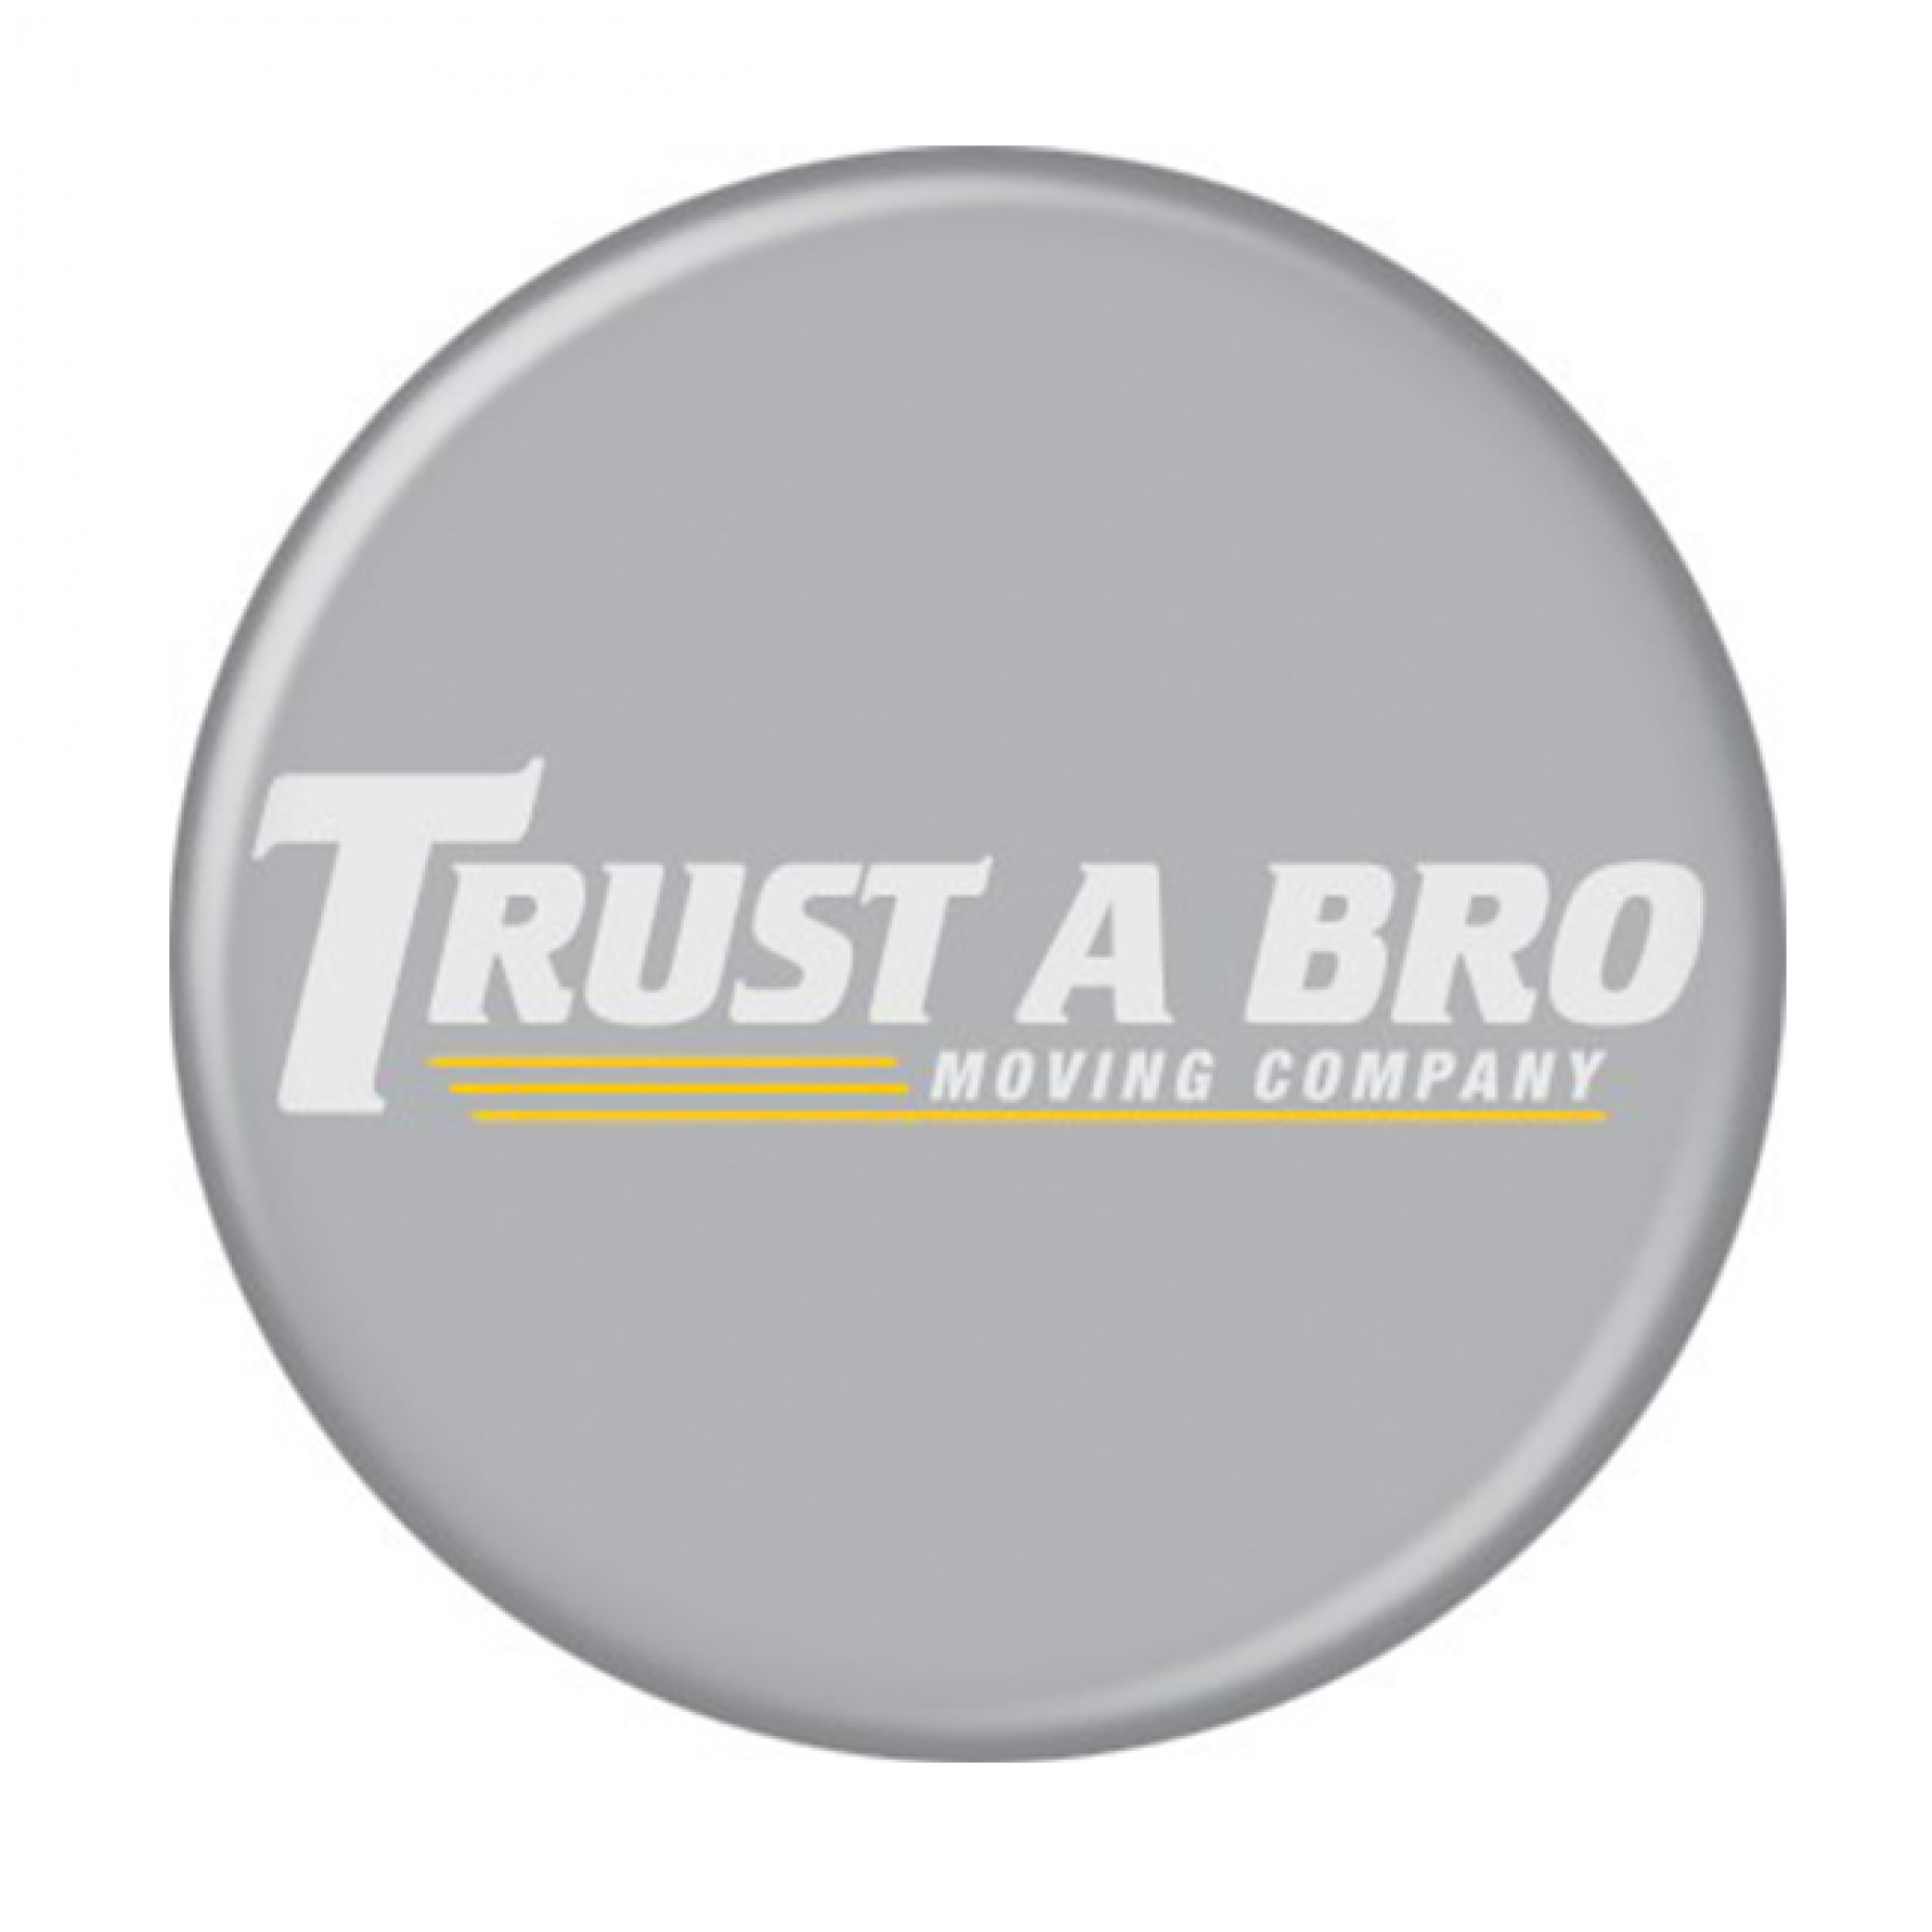 Marvel Studios Hawkeye Series Trust a Bro Moving Company Button